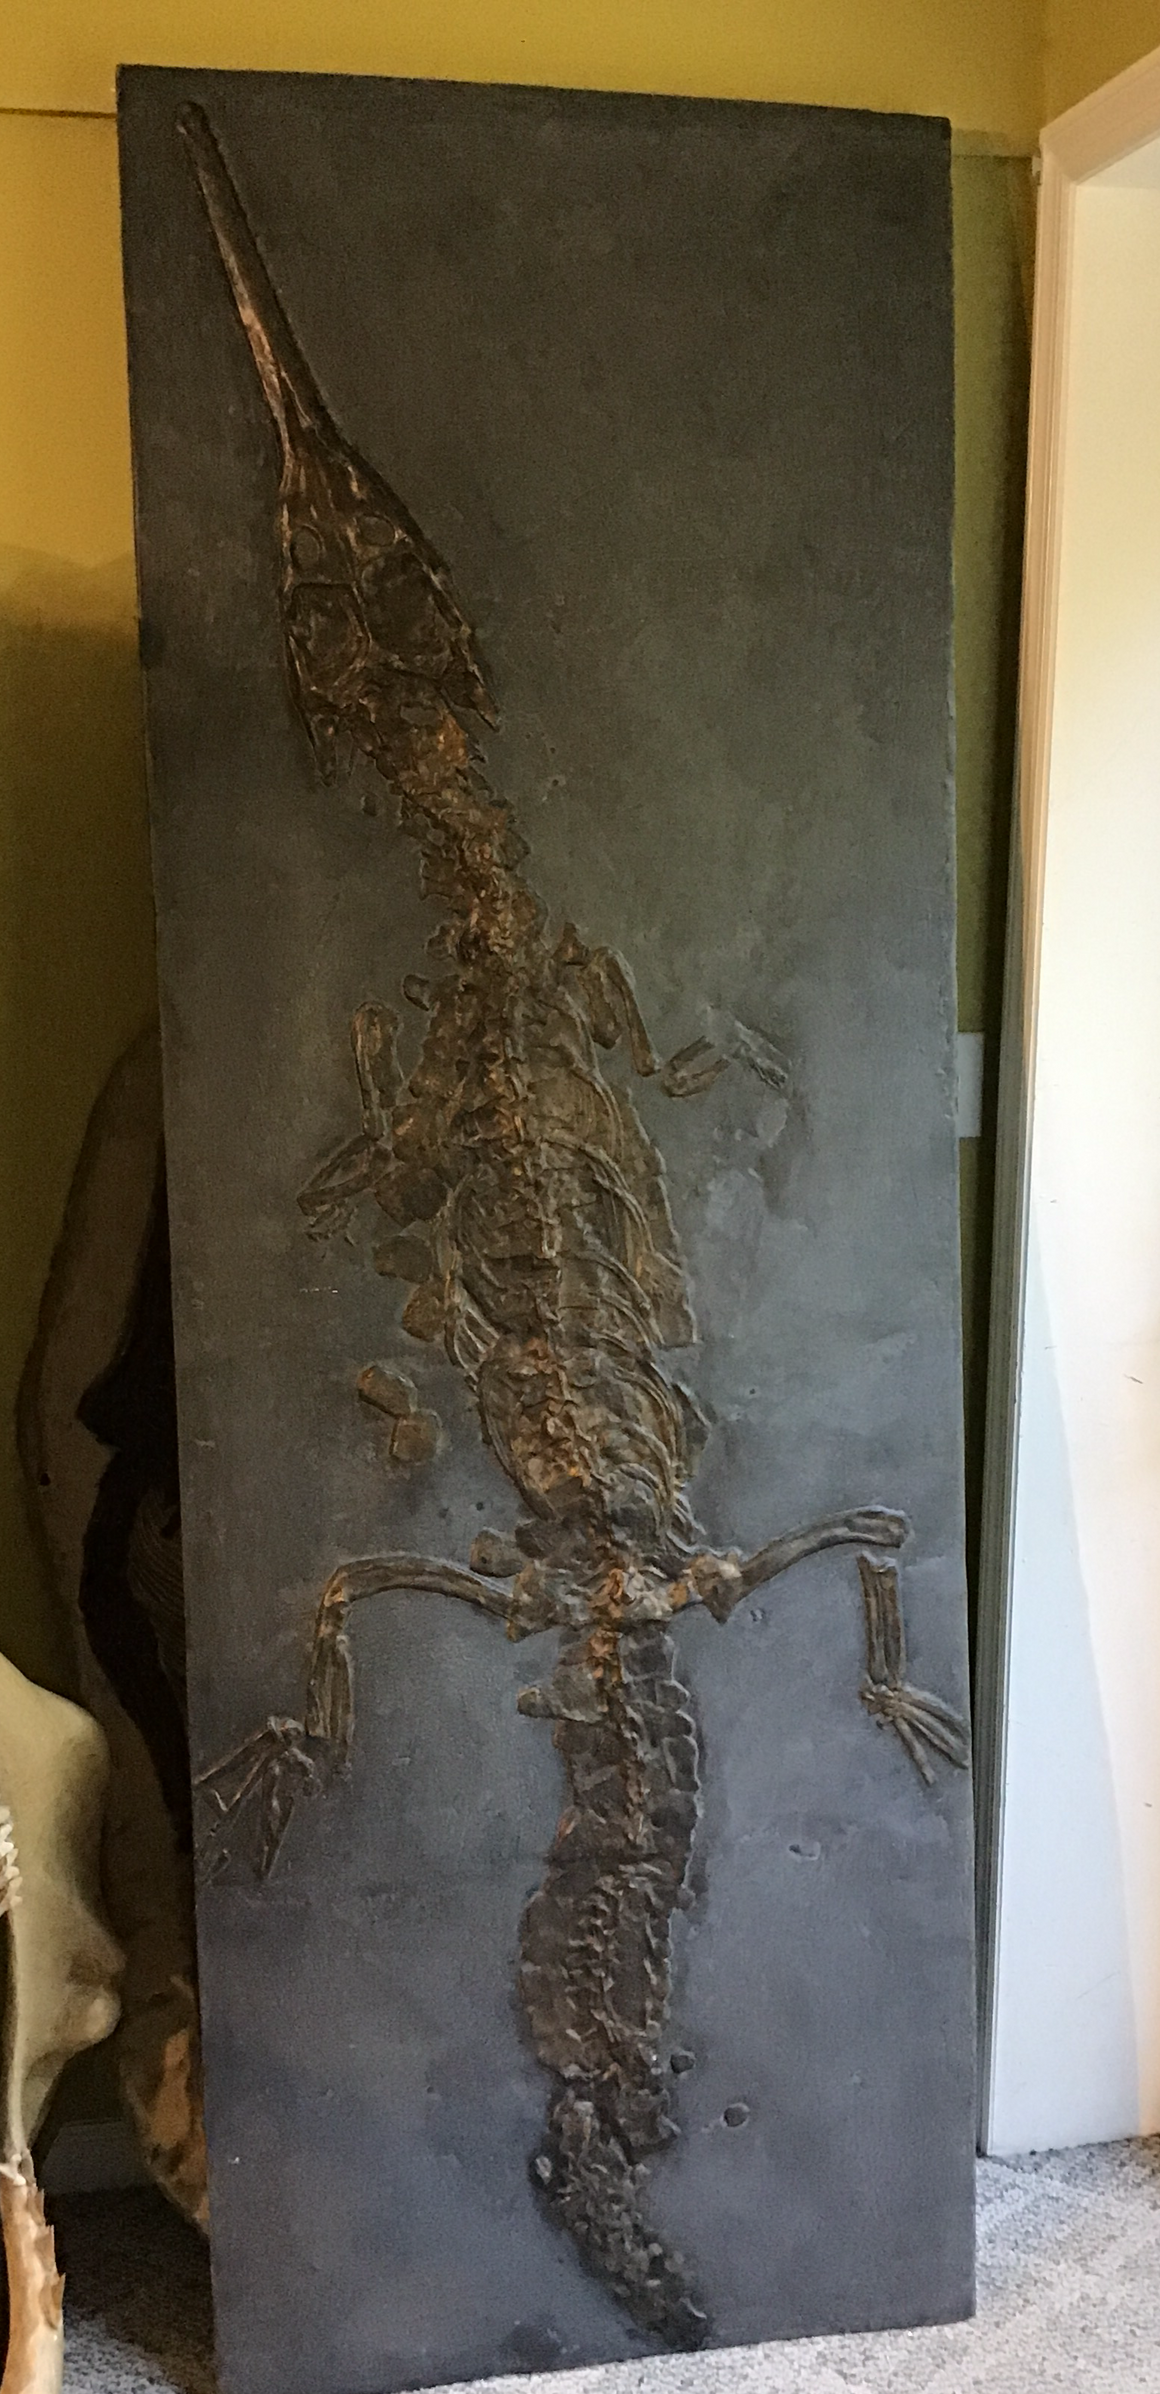 Crocodile Full Skeleton Fossil Replica - On Slab from the Jurassic - 7 ft x 29"